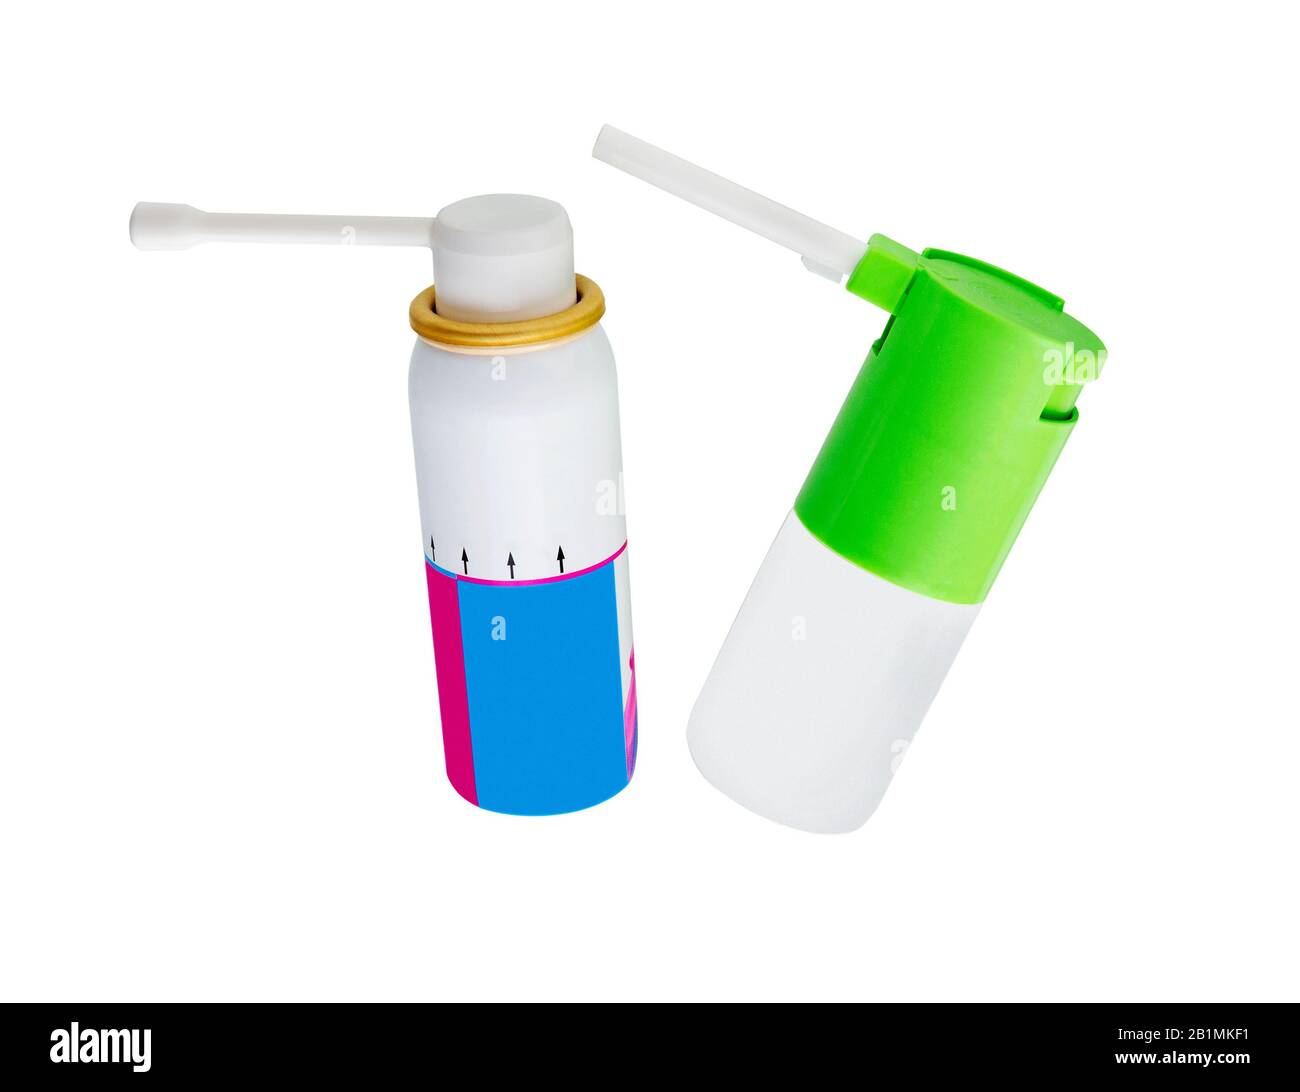 Medicinal throat spray. Spray bottle for aerosols isolated on white background. Stock Photo